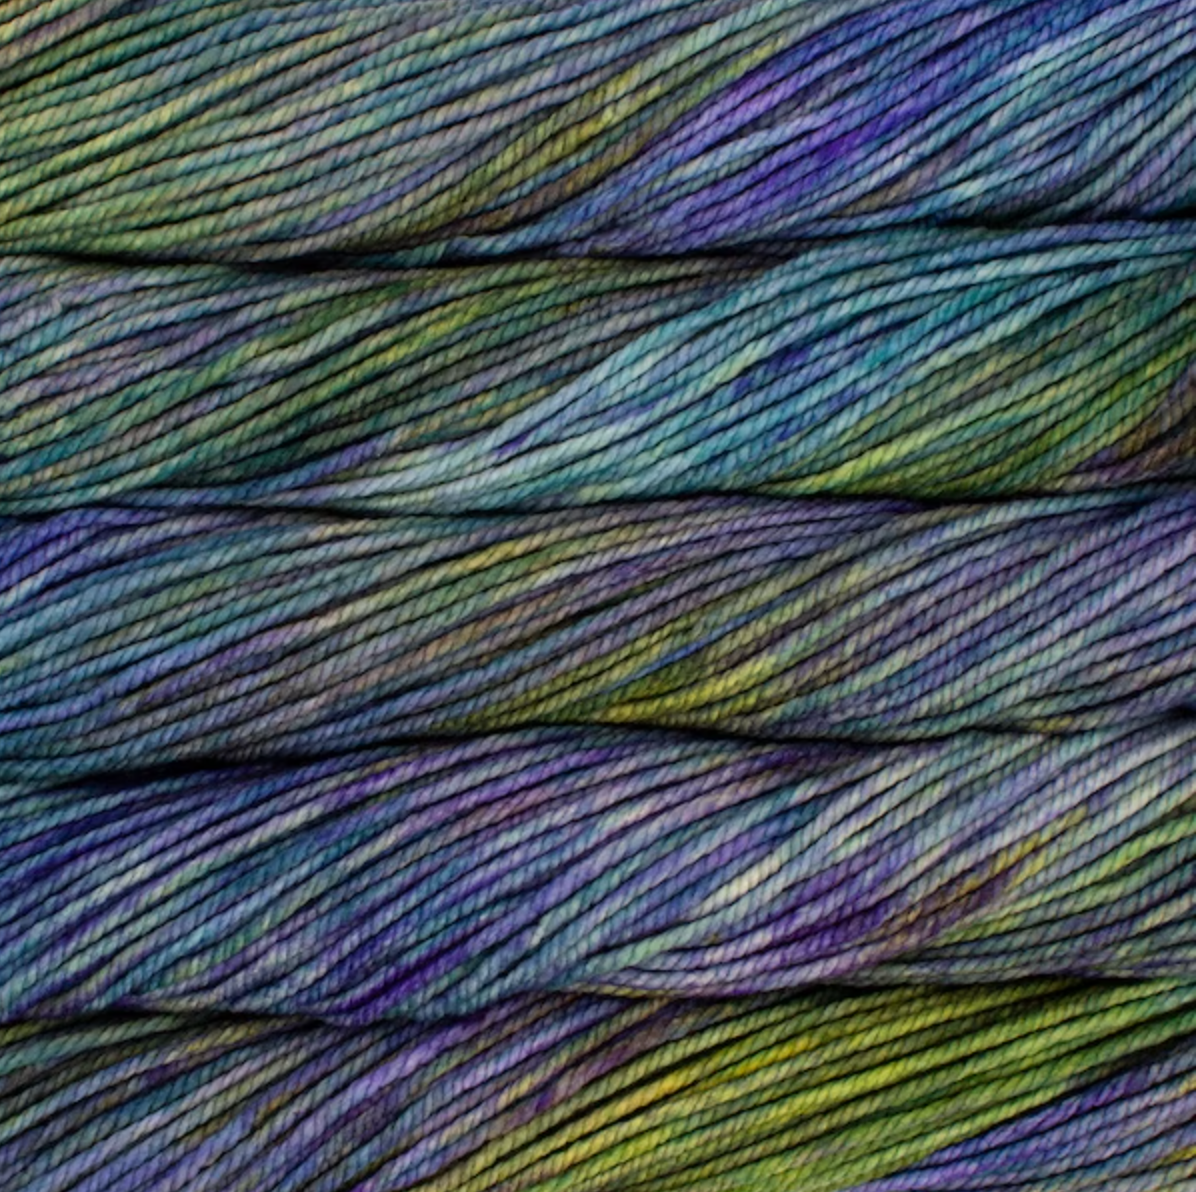 Malabrigo CHUNKY Sunset bulky Yarn, 3 Ply, 100% Merino Wool